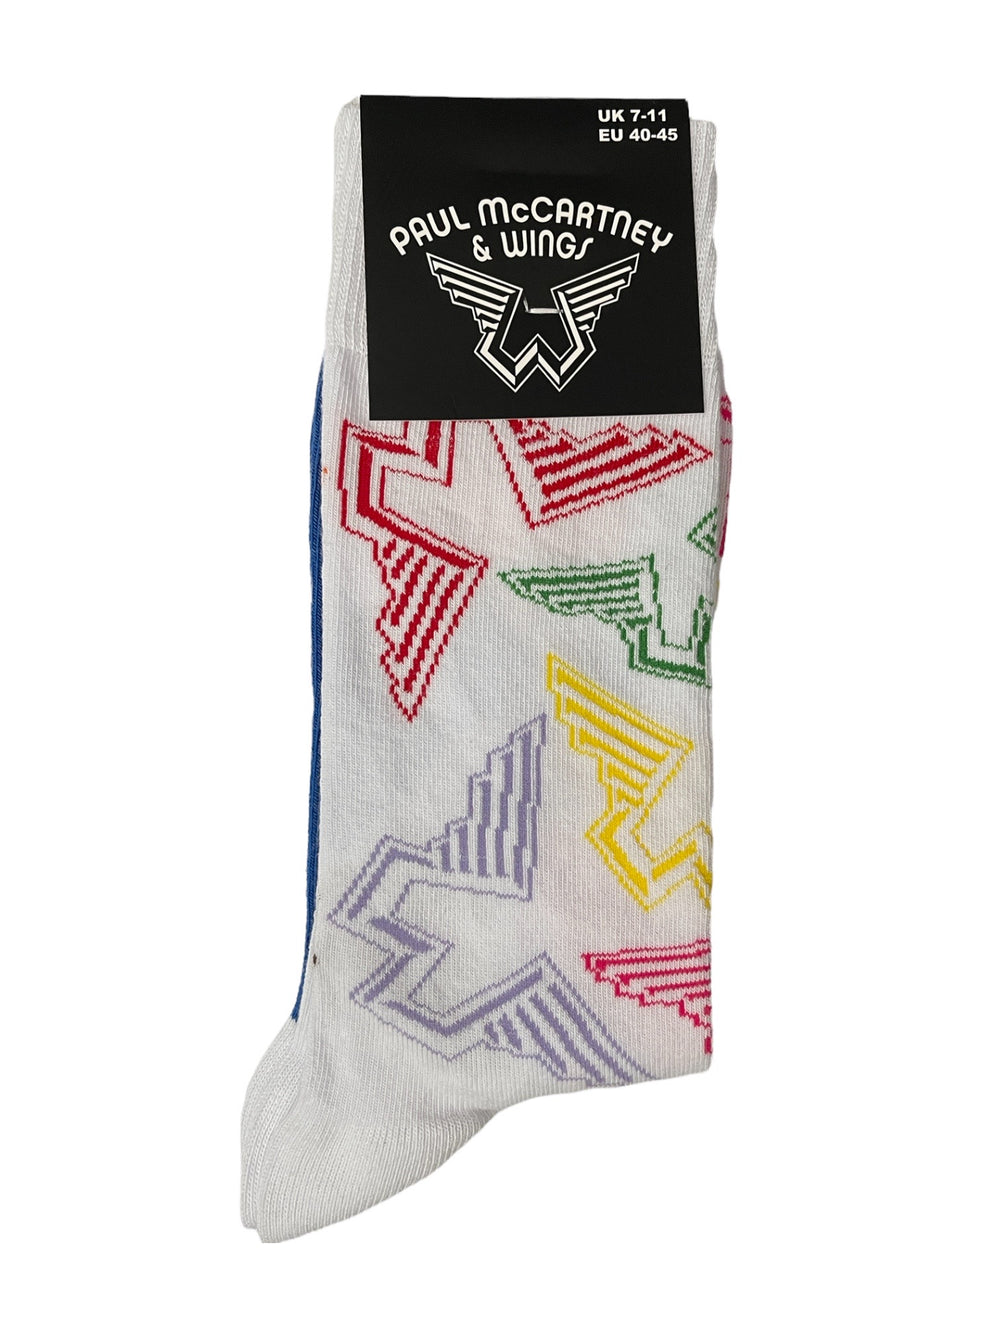 Paul McCartney & Wings Beatles The White Official Product 1 Pair Jacquard Socks Size 7-11 UK